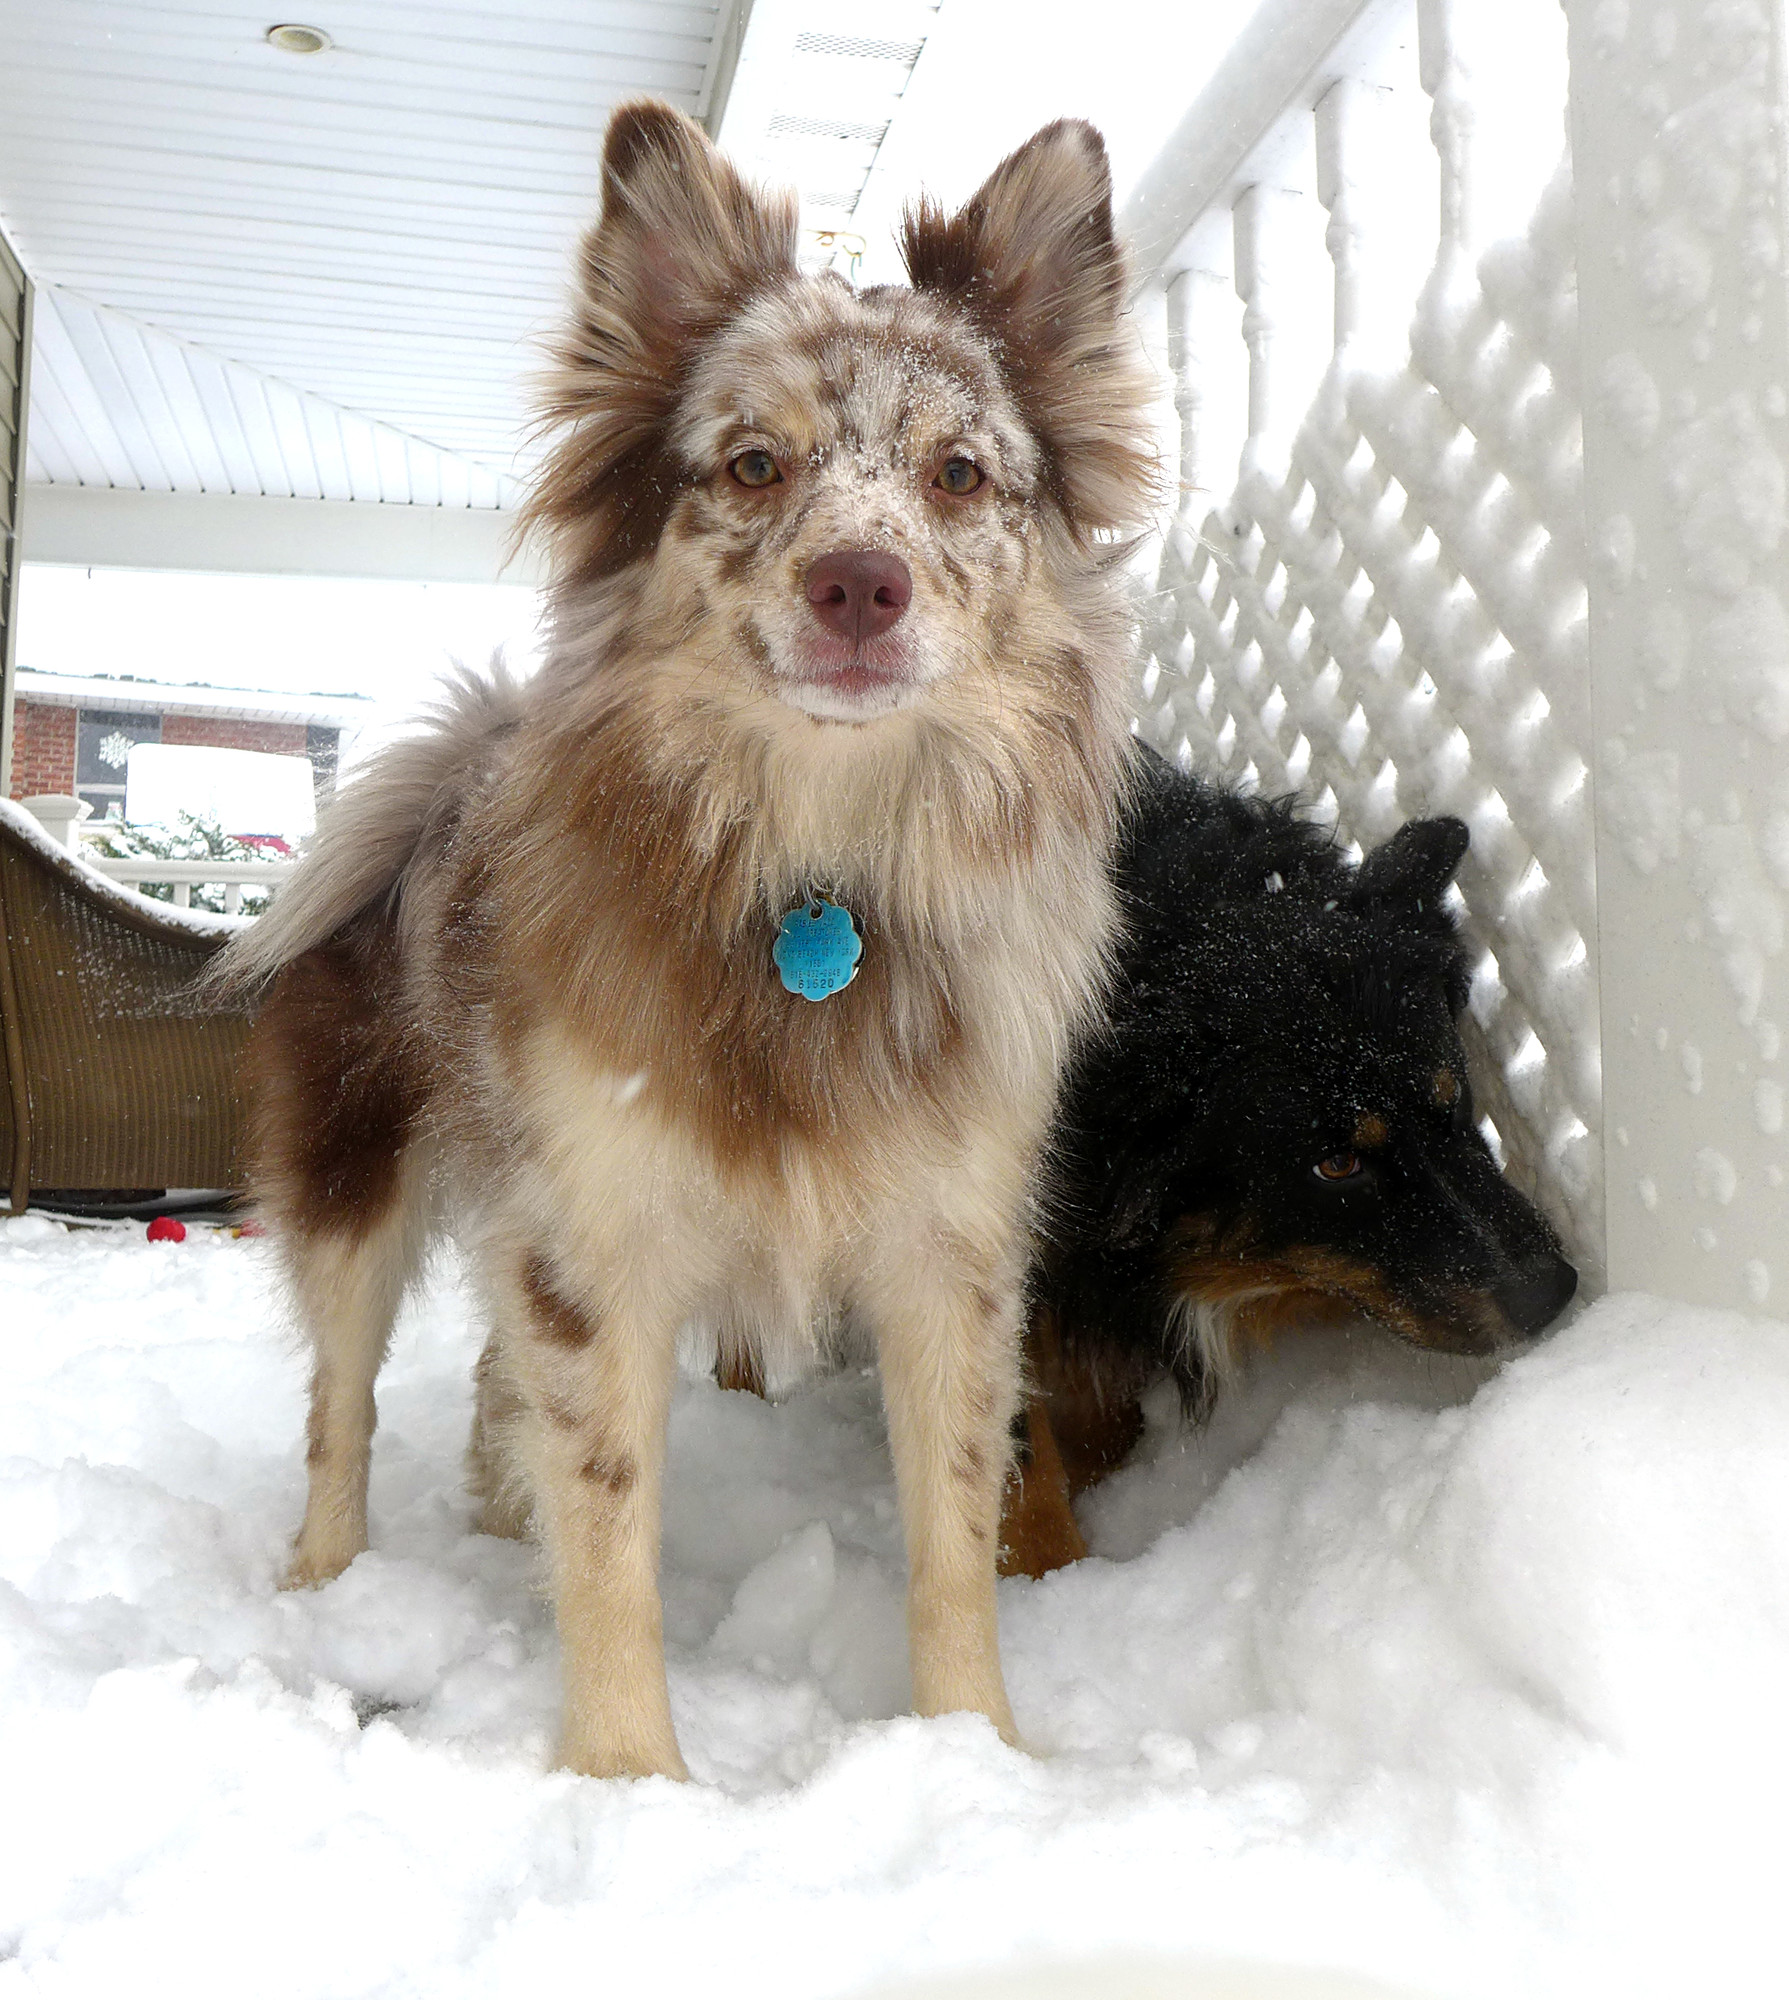 Shea and Huckle romp in the snow in a backyard in East Rockaway last year.